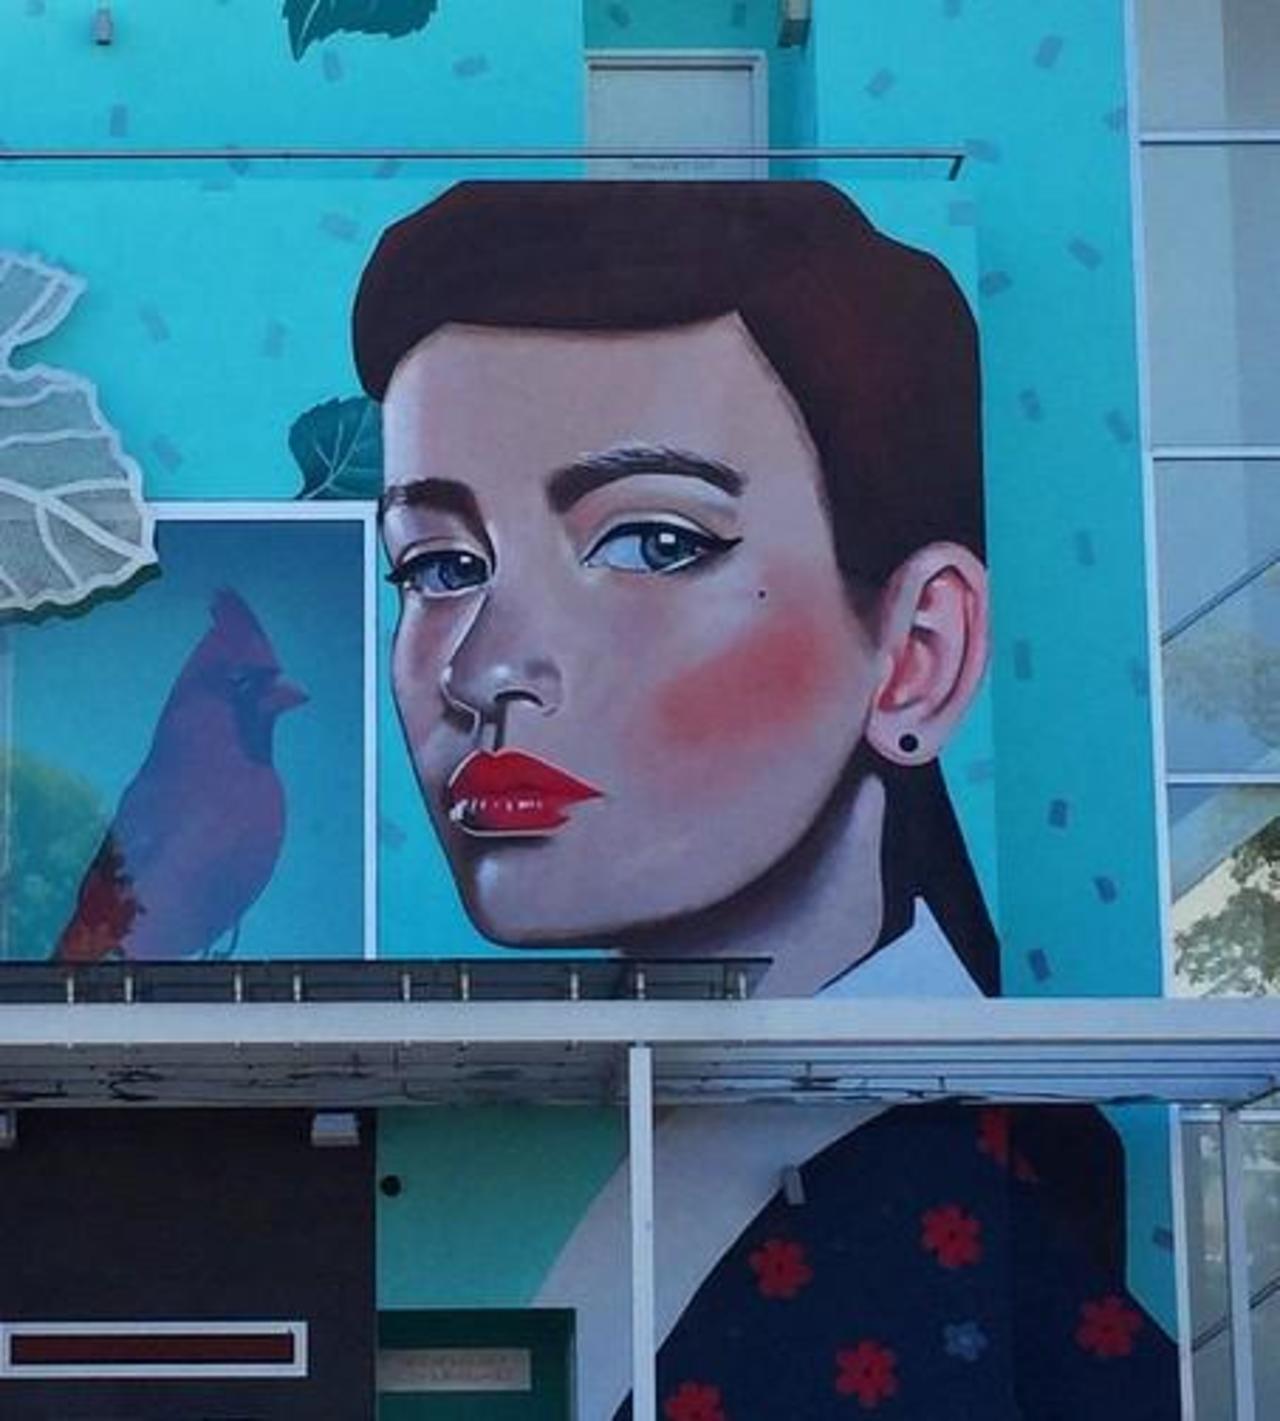 Superb large scale Street Art portraiture by Lisa King in Adelaide

#art #arte #graffiti #streetart http://t.co/kn8447XJ1C